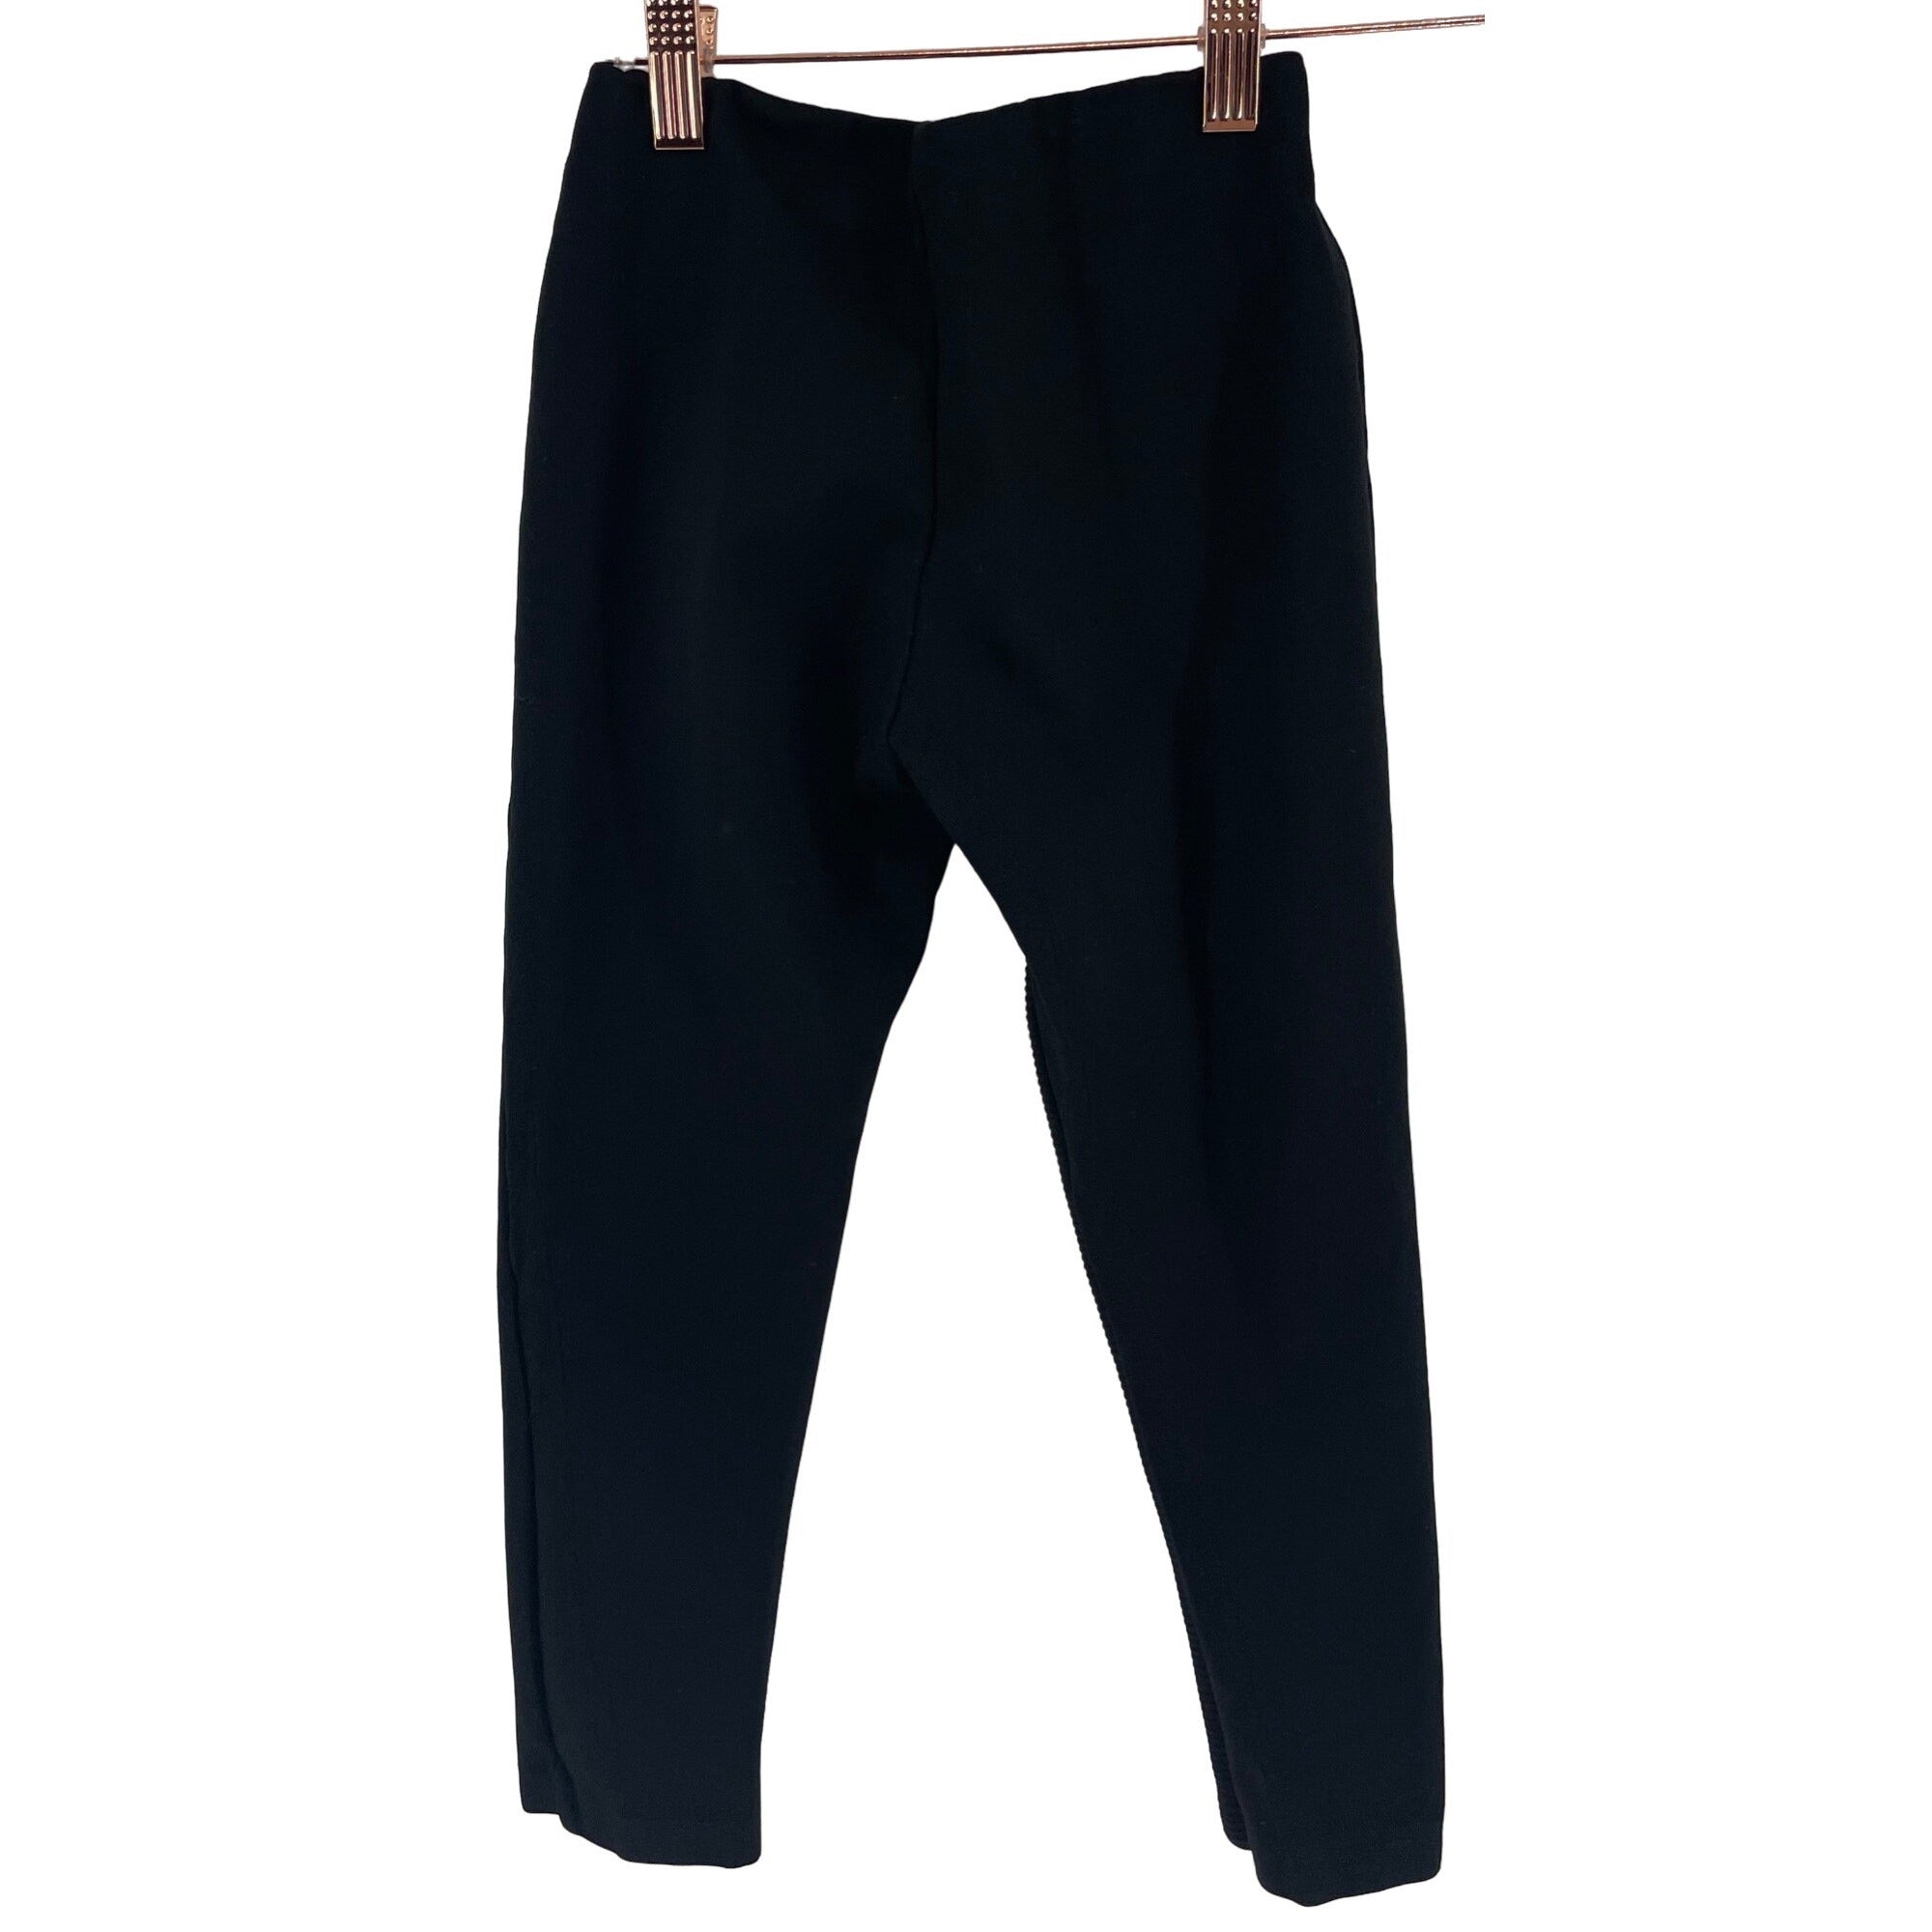 Zara Girl's Size 8 Skinny Pants W/ Elastic Waist & Zipper Pockets